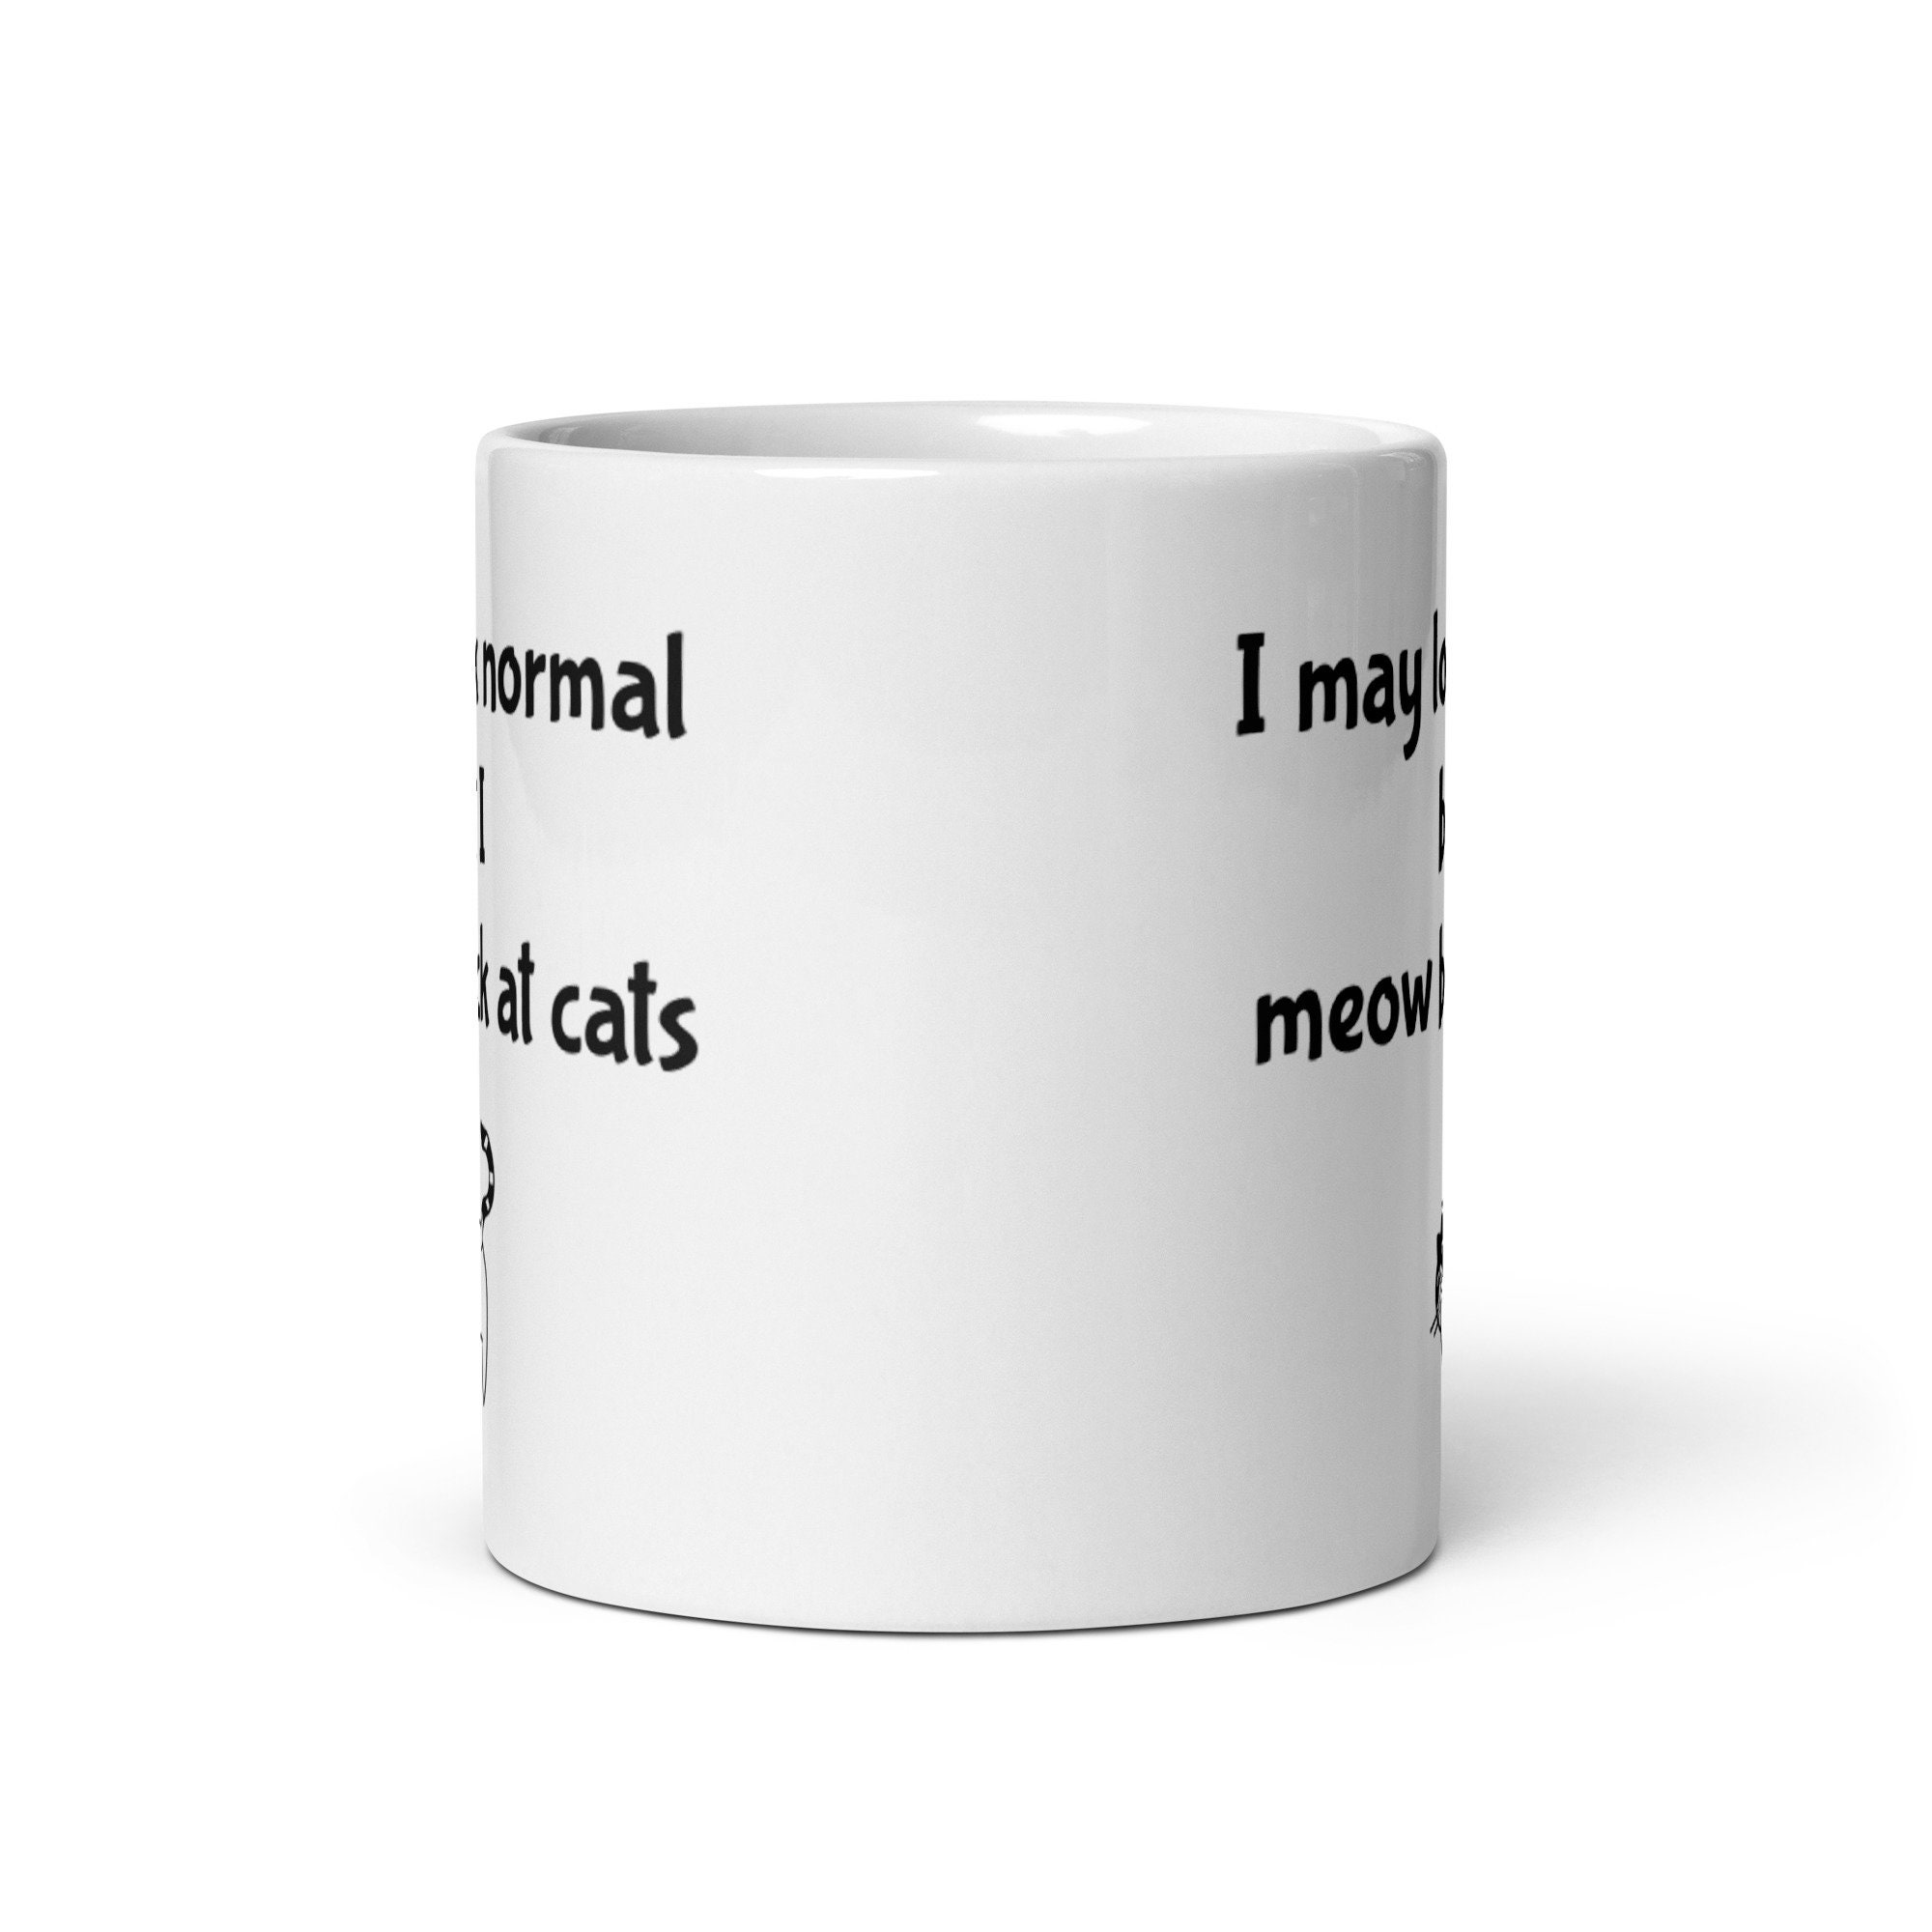 Discover I meow back at cats coffee mug | Fun Cat Mug